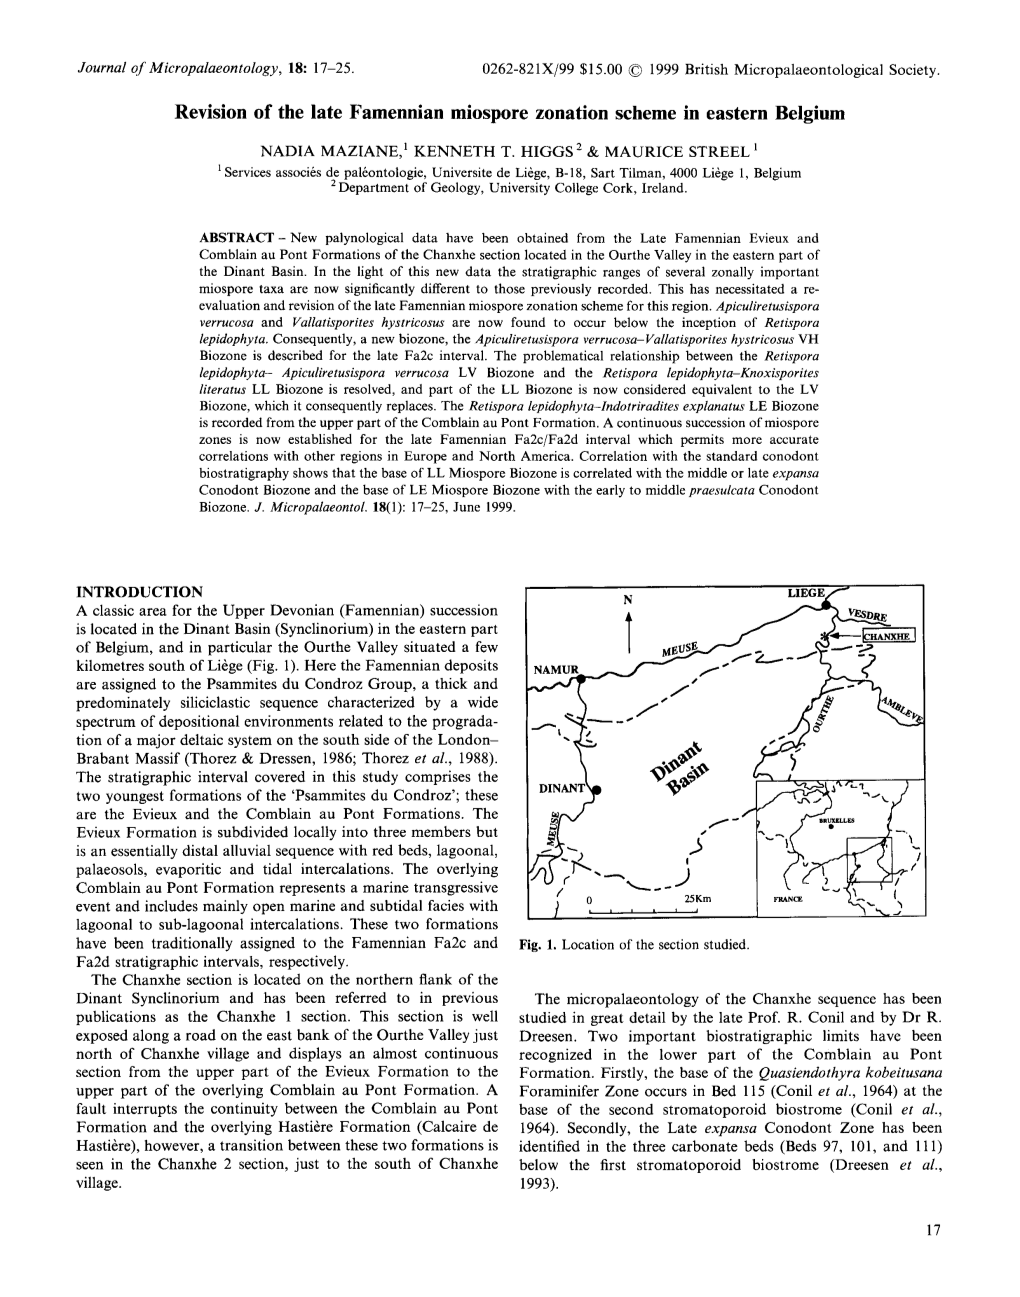 Revision of the Late Famennian Miospore Zonation Scheme in Eastern Belgium